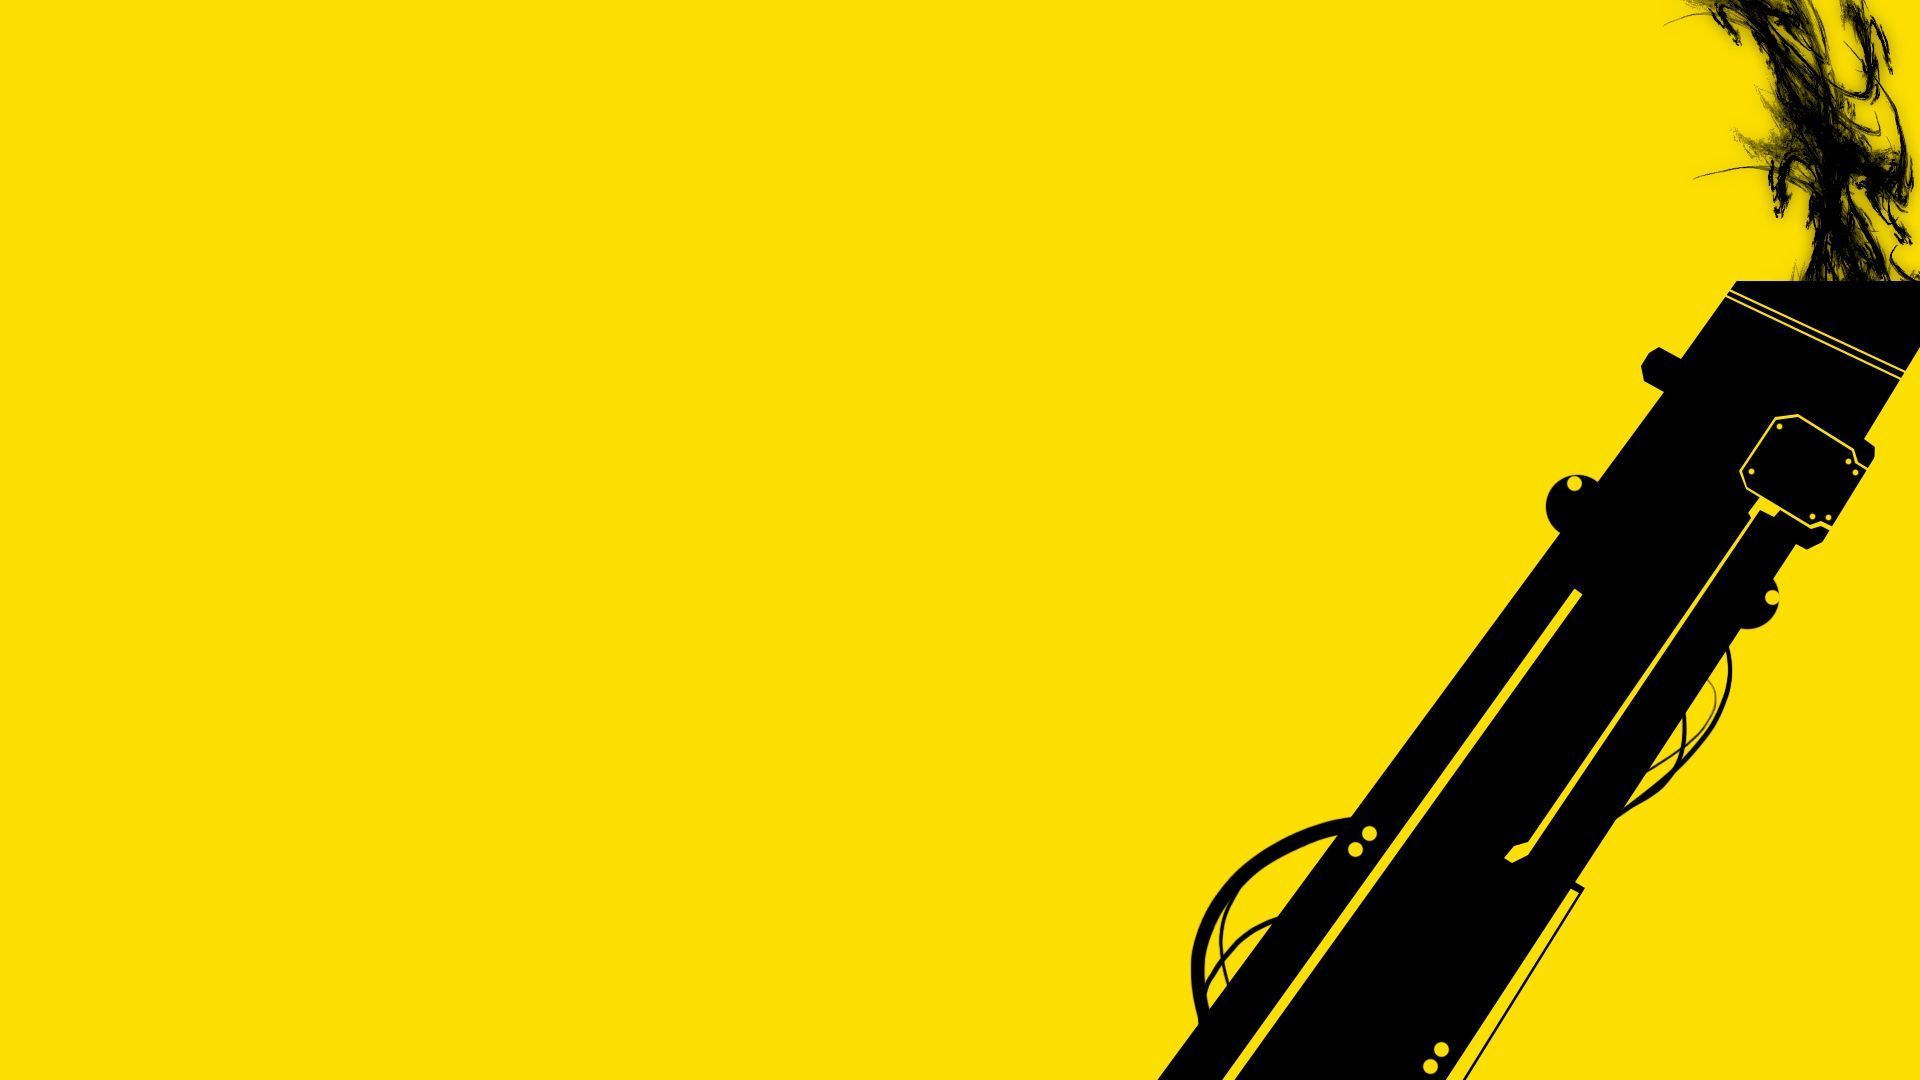 Black Gun On Yellow Background Wallpaper PC #5650 Wallpaper | High ...